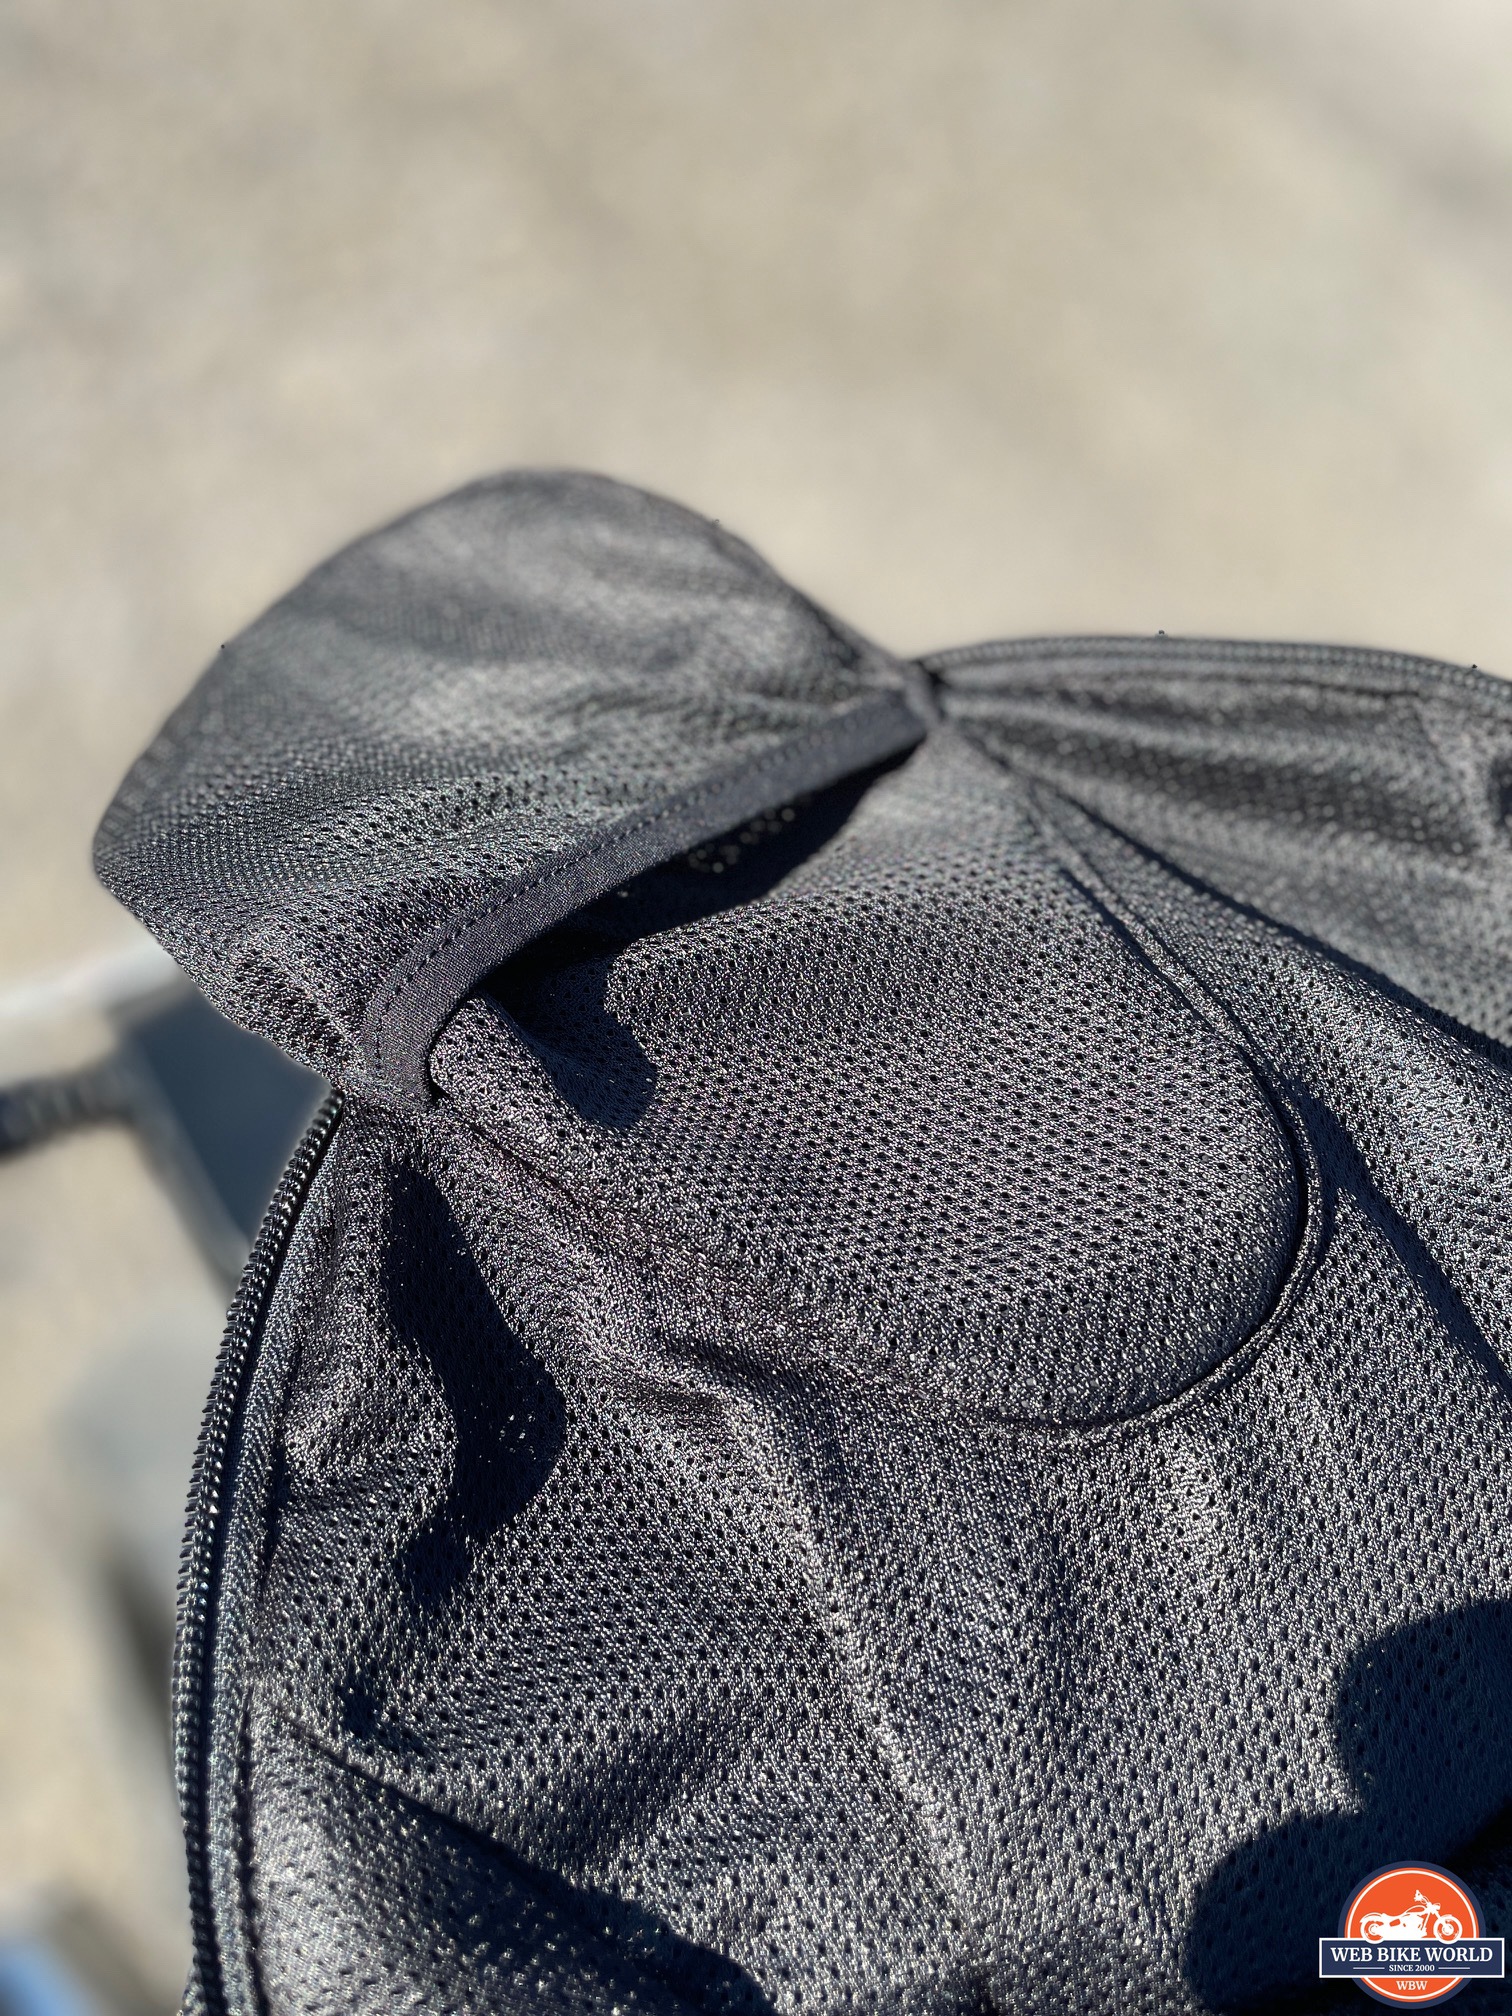 Mesh armor pocket on Scorpion EXO Transformer Jacket